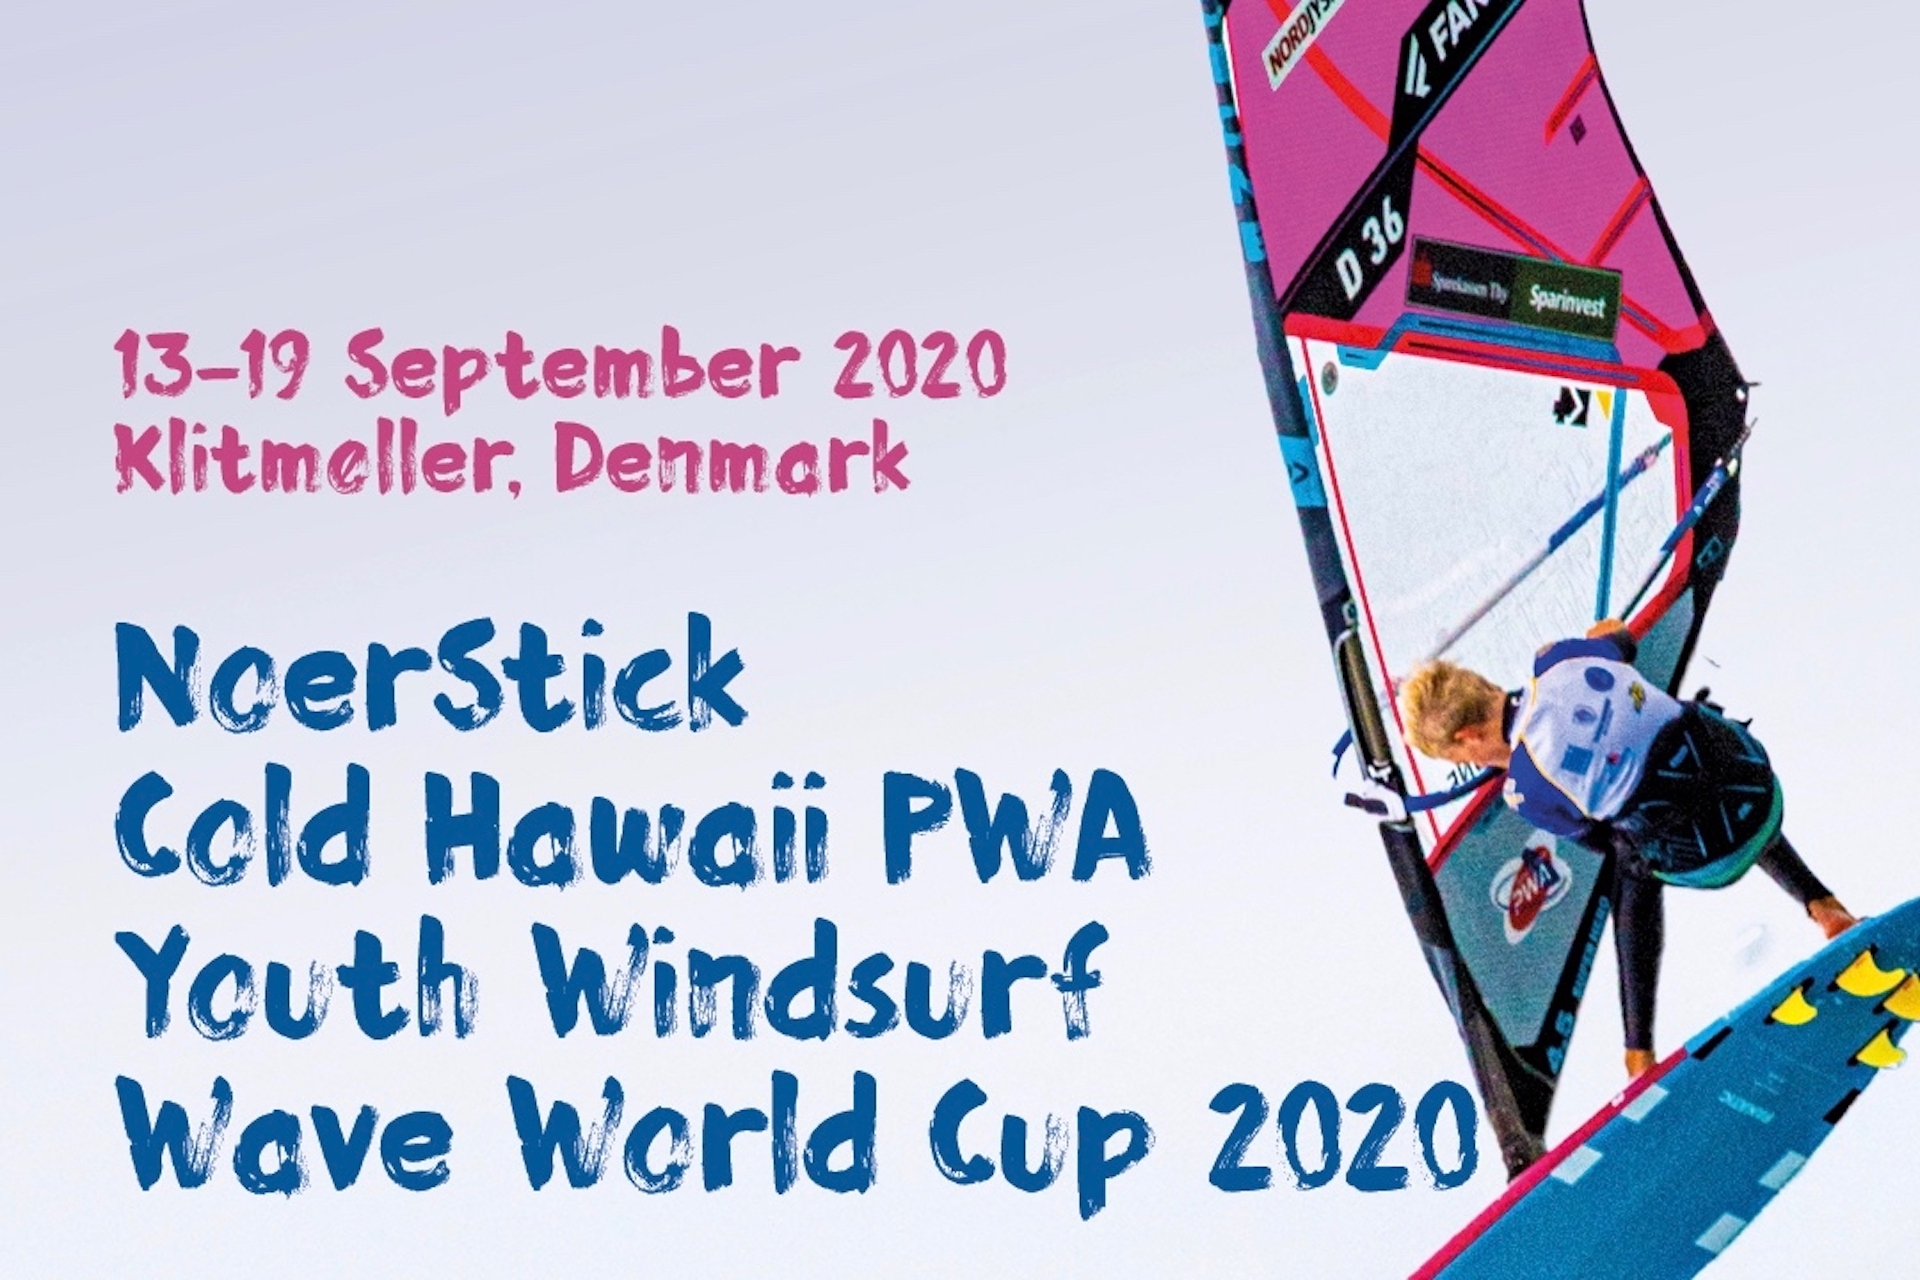 Youth_Windsurf_Wave_World_Cup_2020-story__1_.jpg